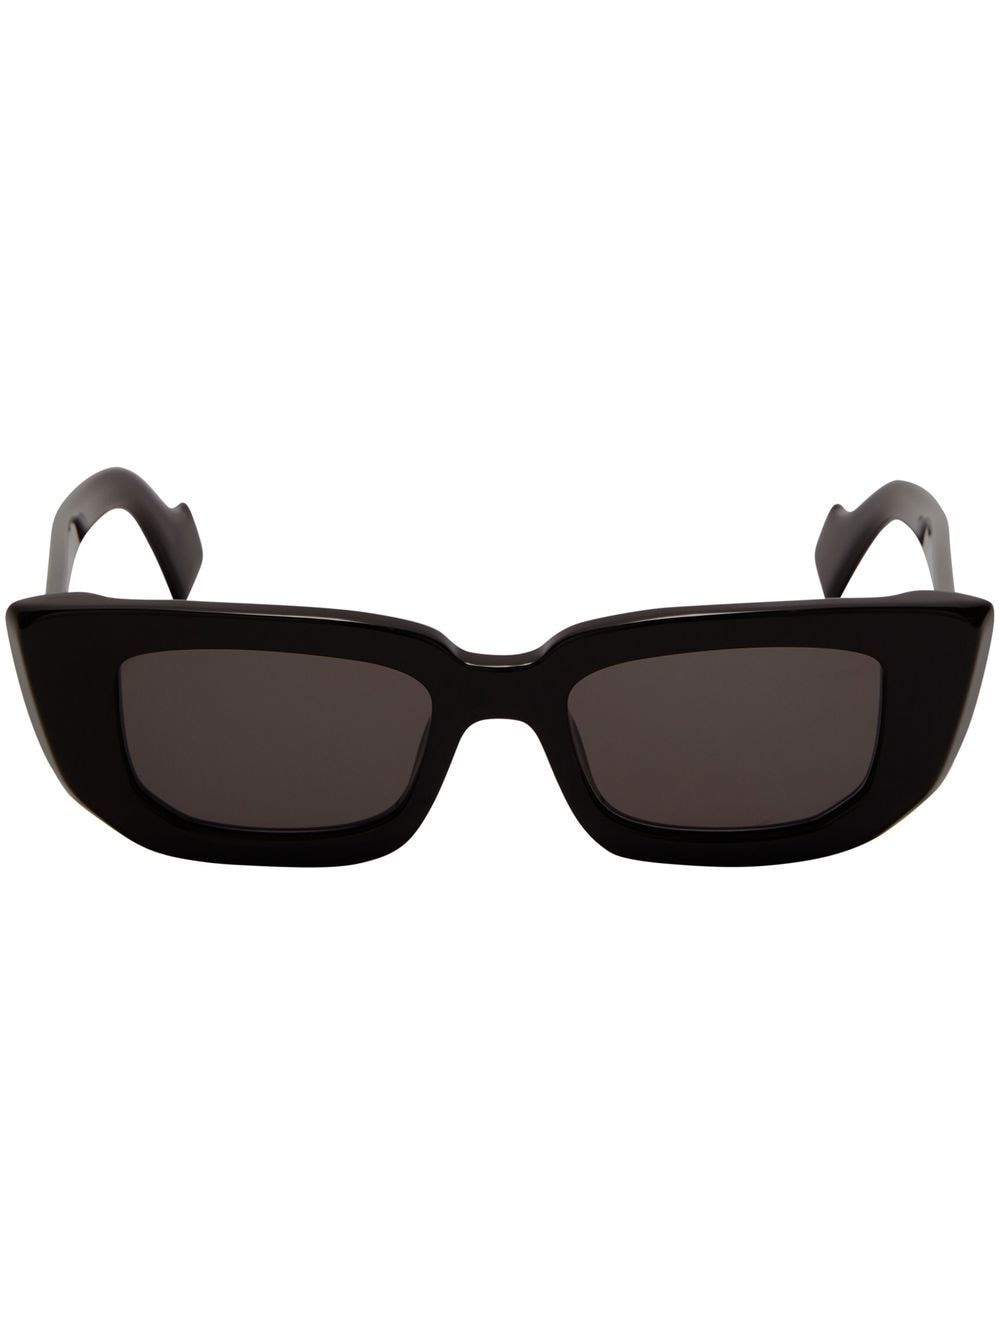 Nova square-frame sunglasses